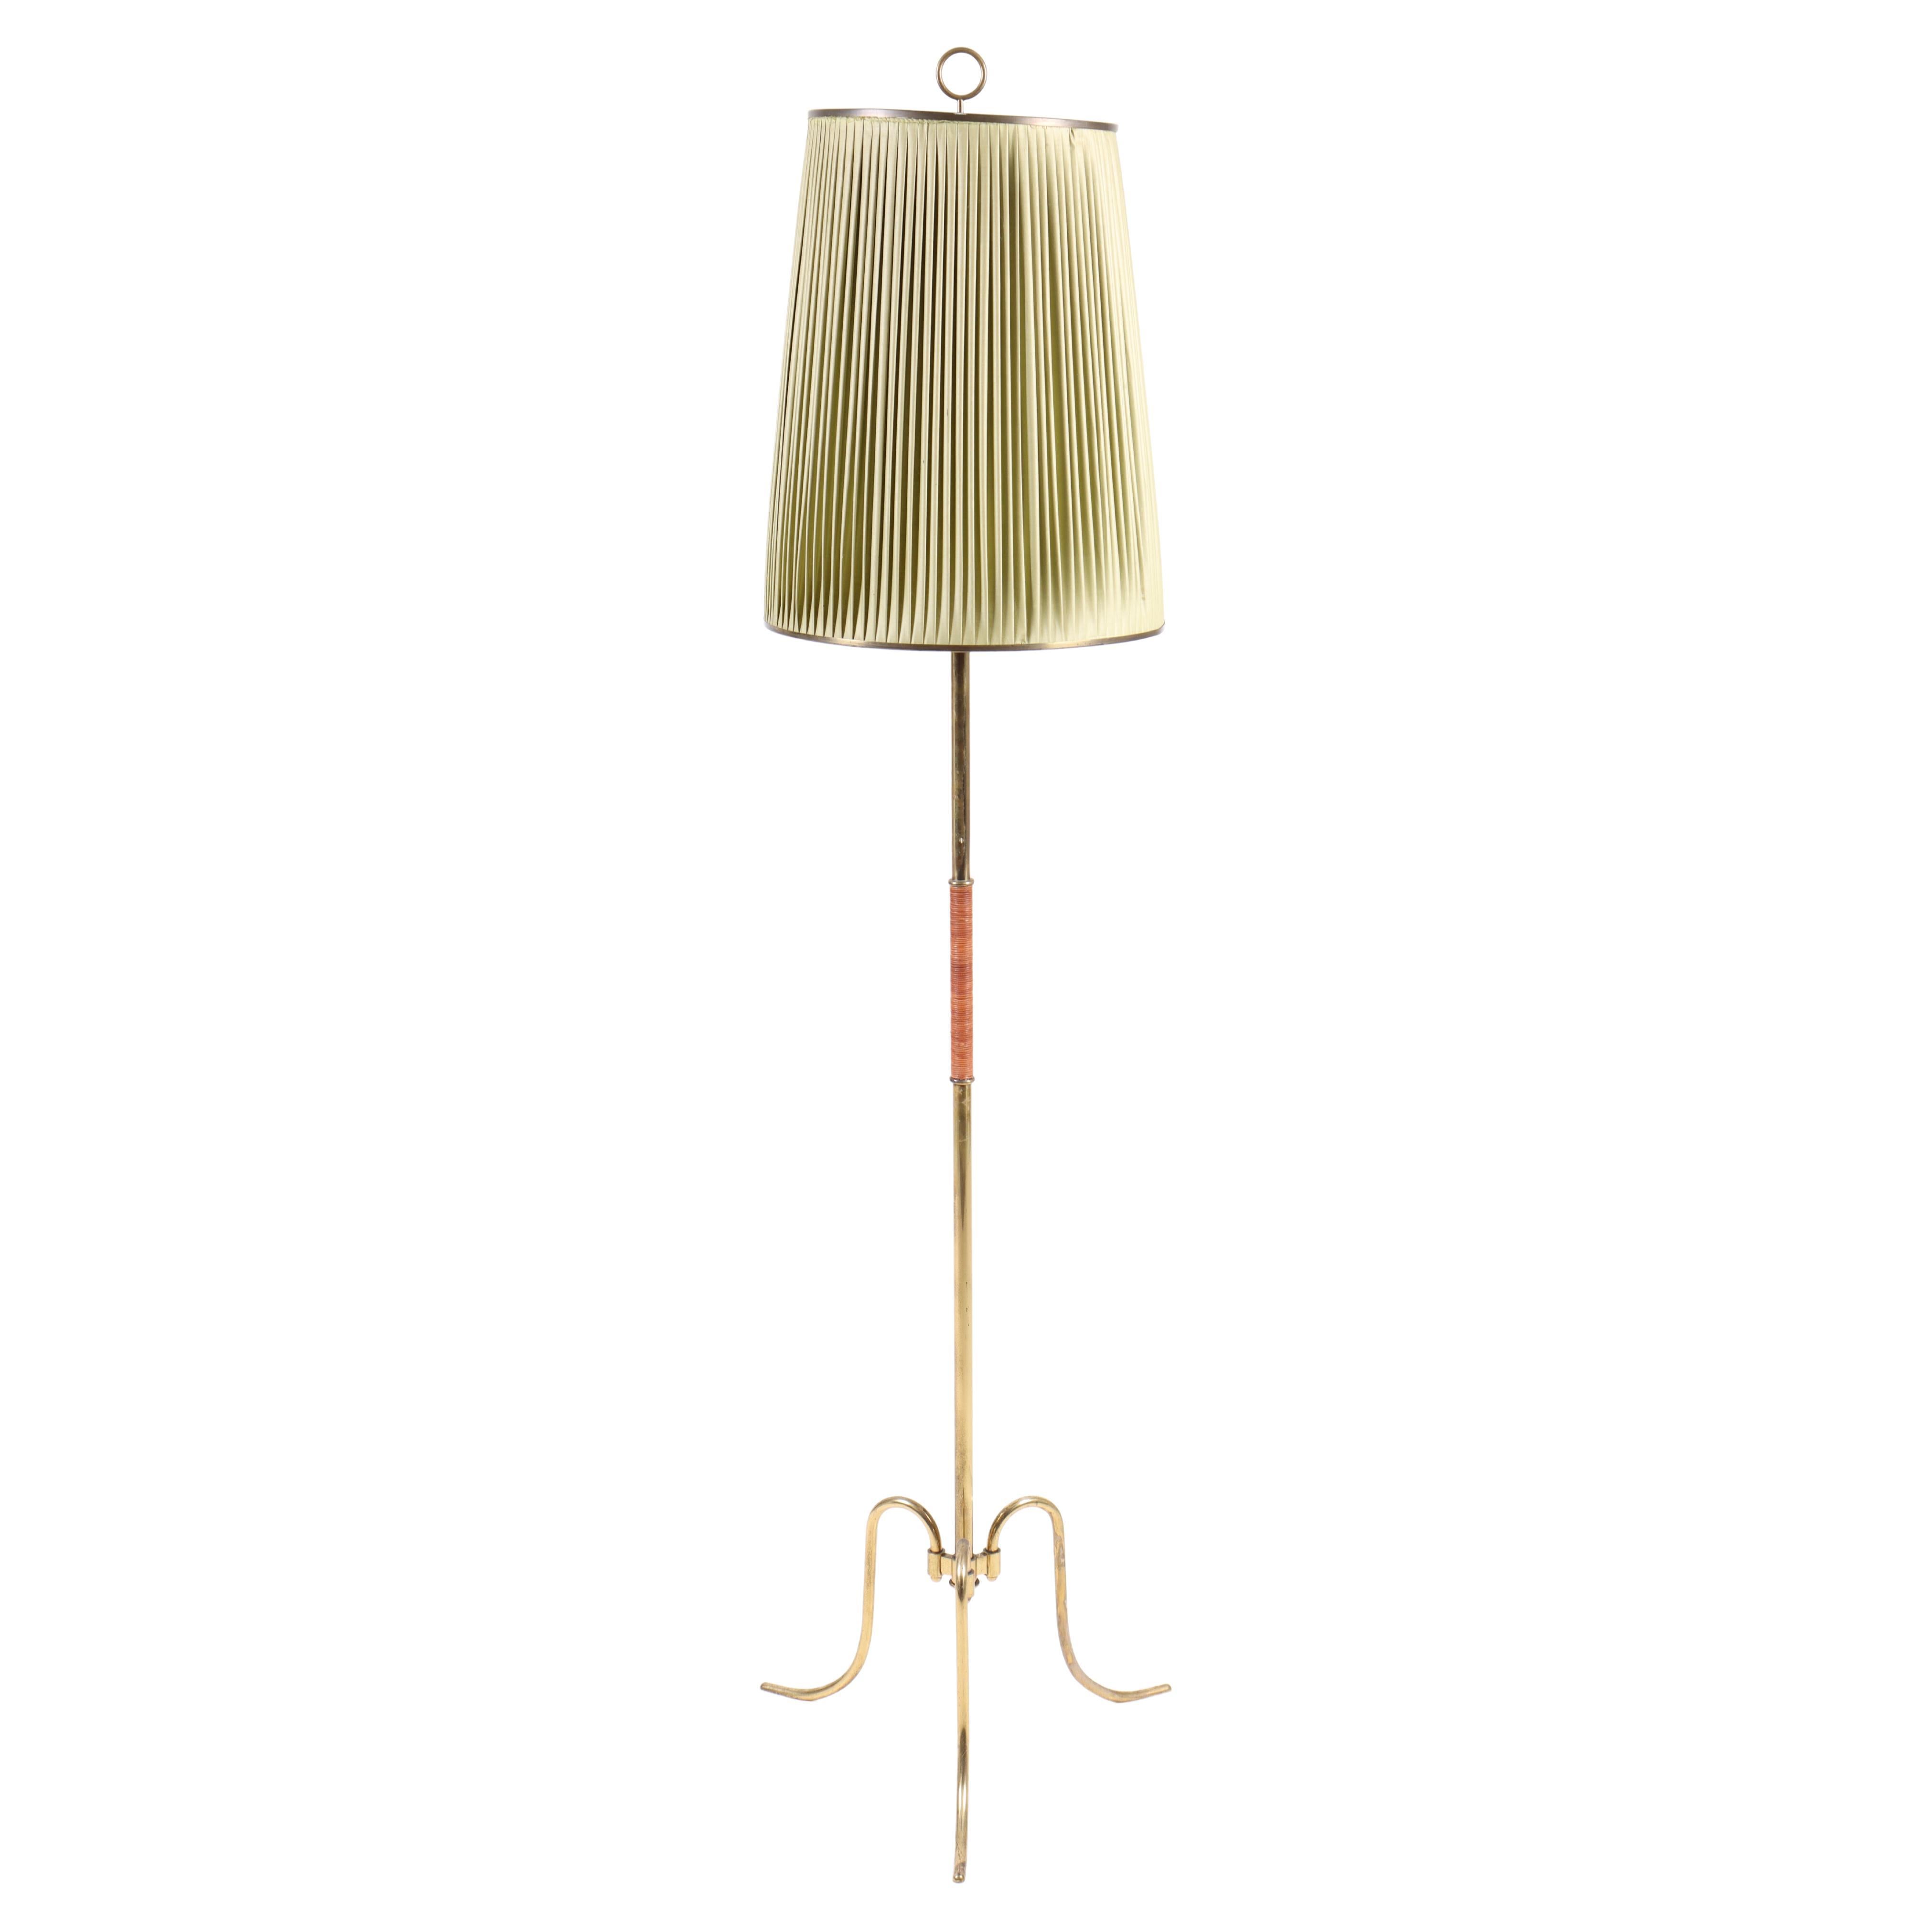 Elegant Midcentury Floor Lamp in Brass by Lysberg Hansen, Danish Design For Sale